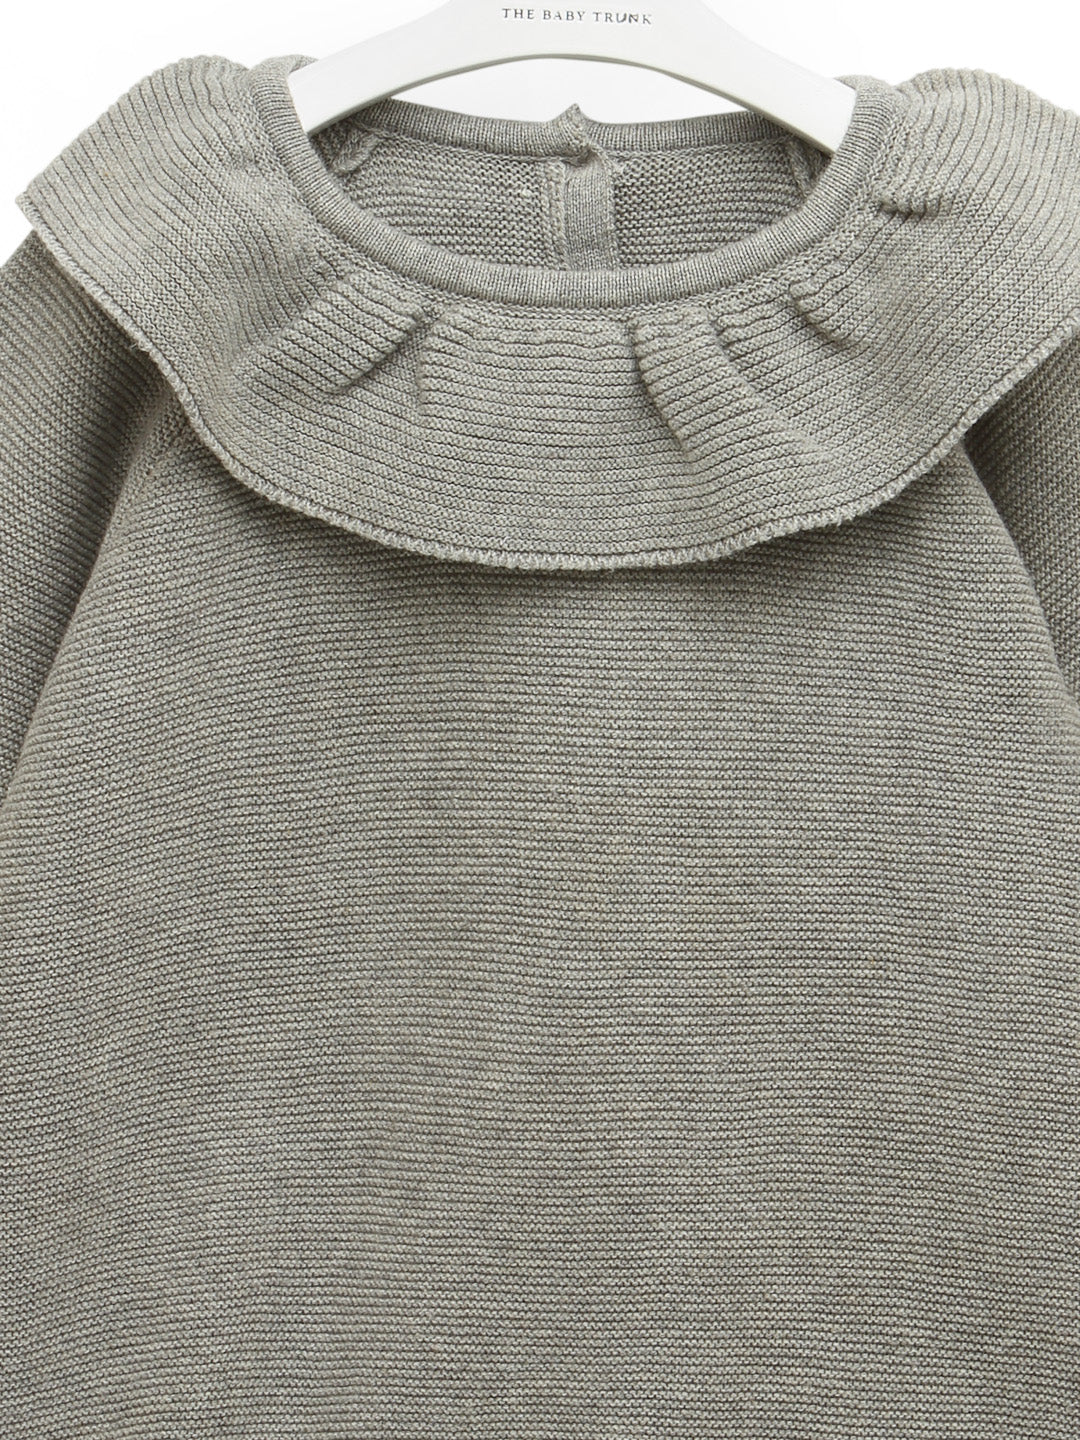 Puritan Sweater For Baby Girl